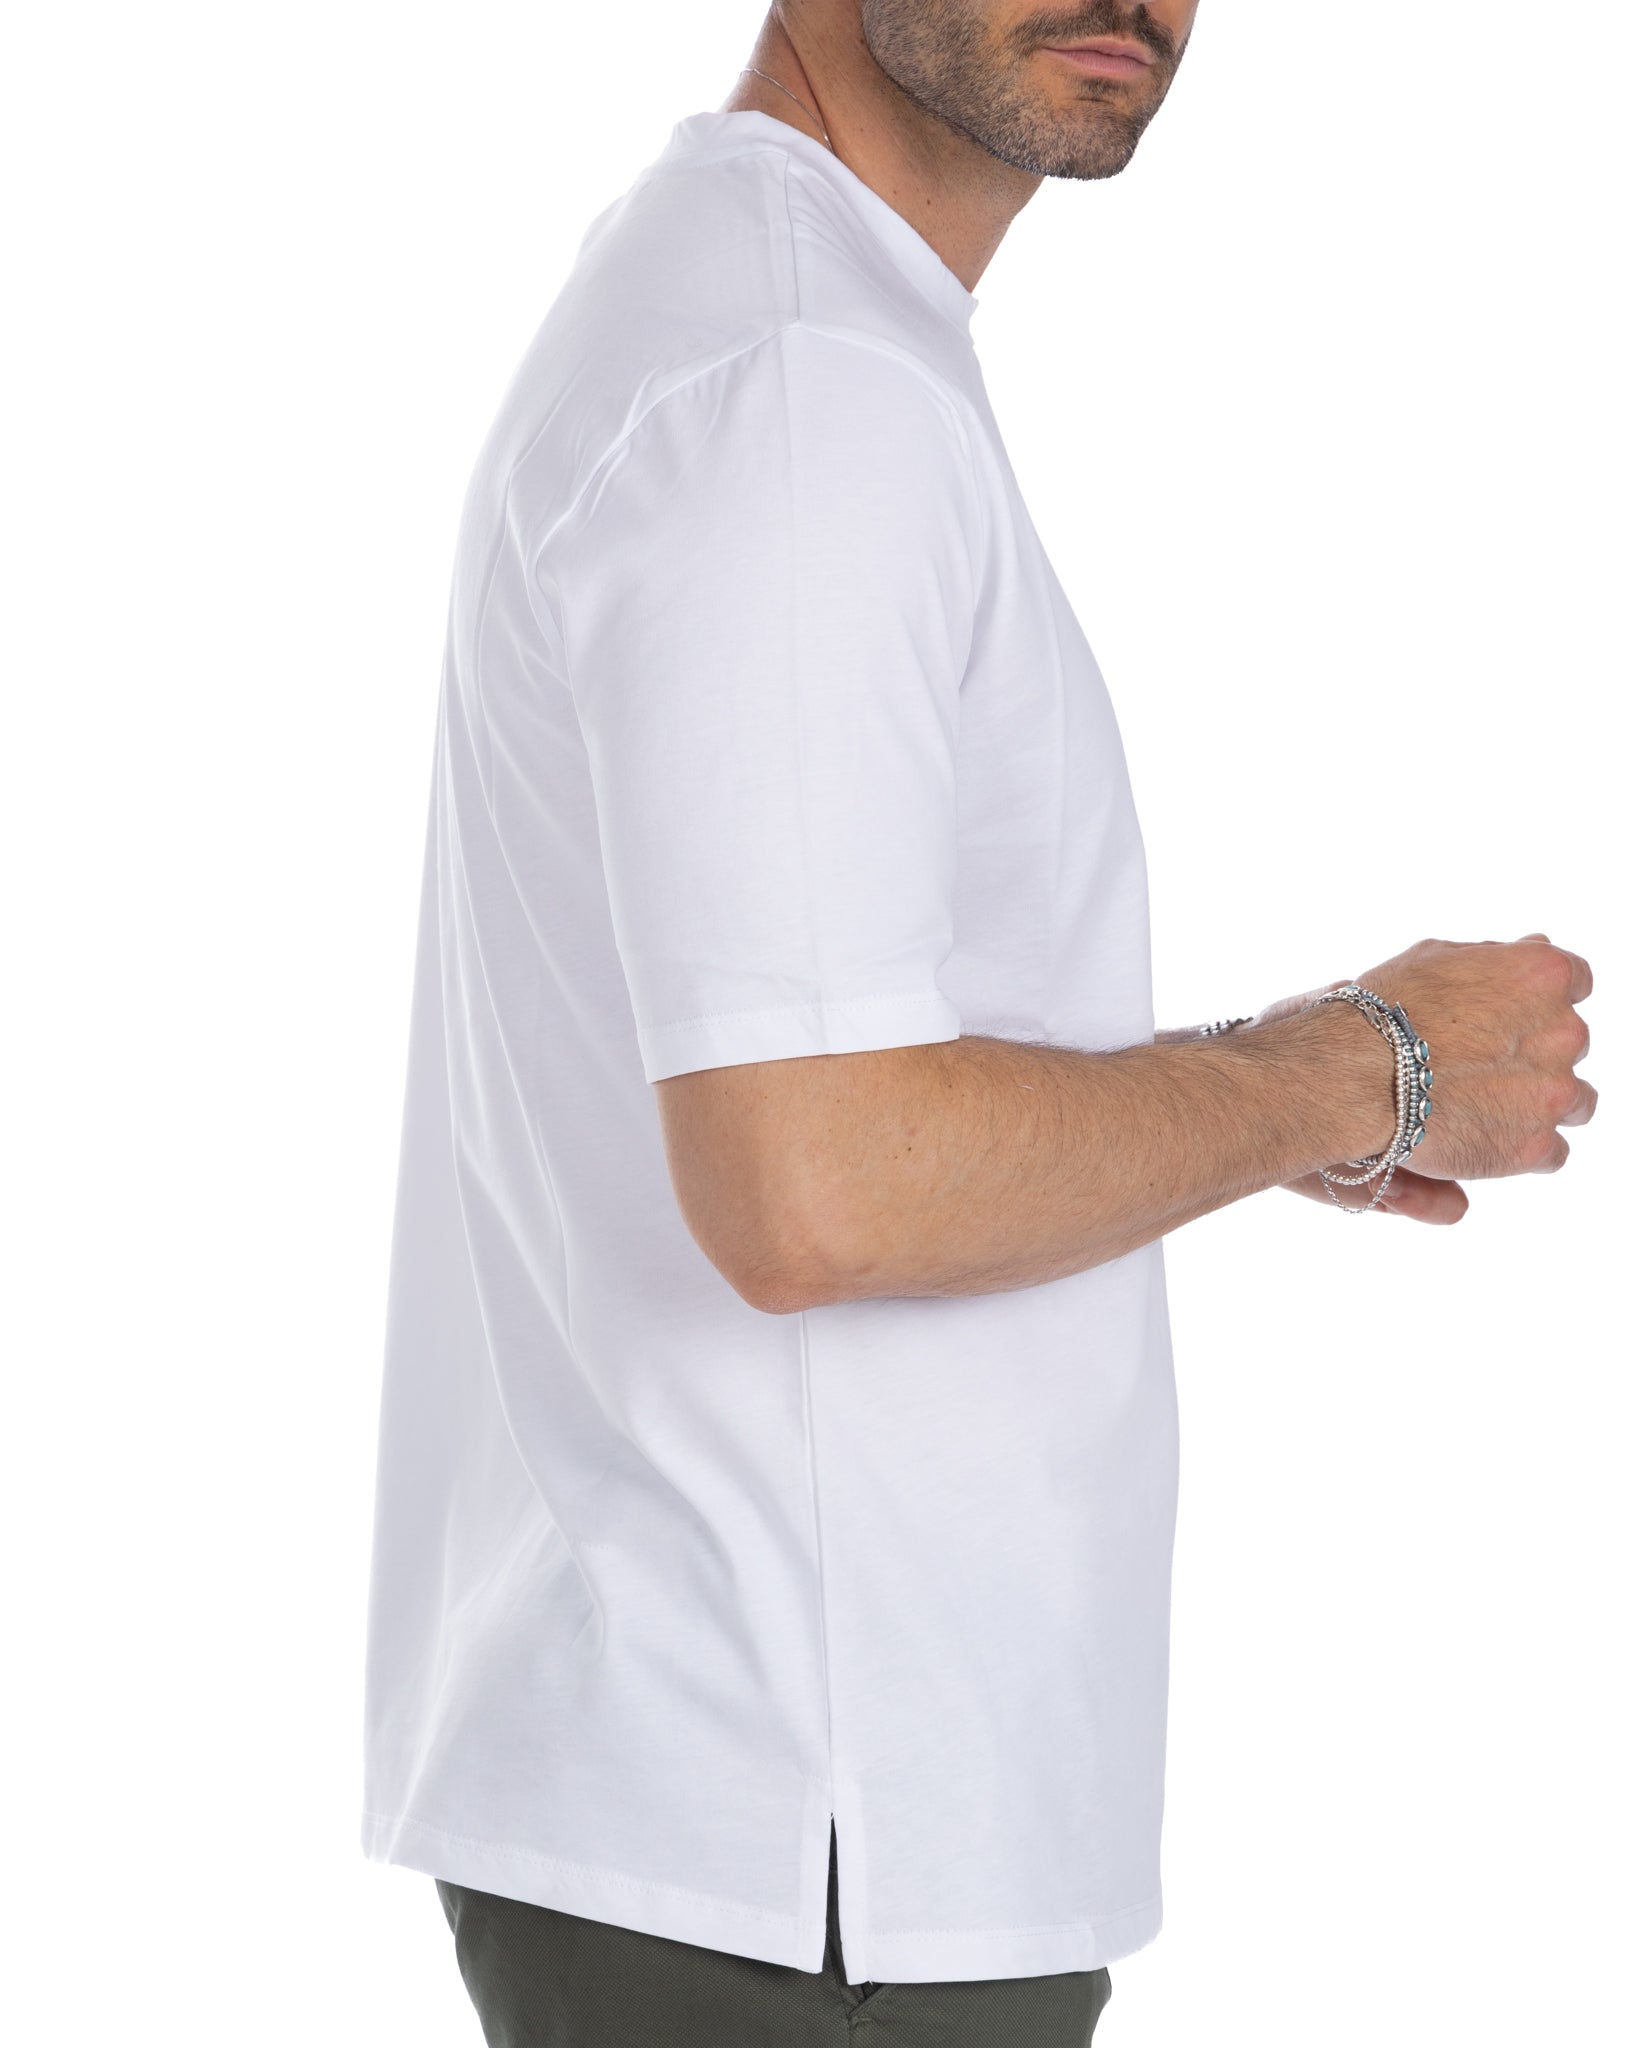 Tee - t-shirt basique en coton blanc